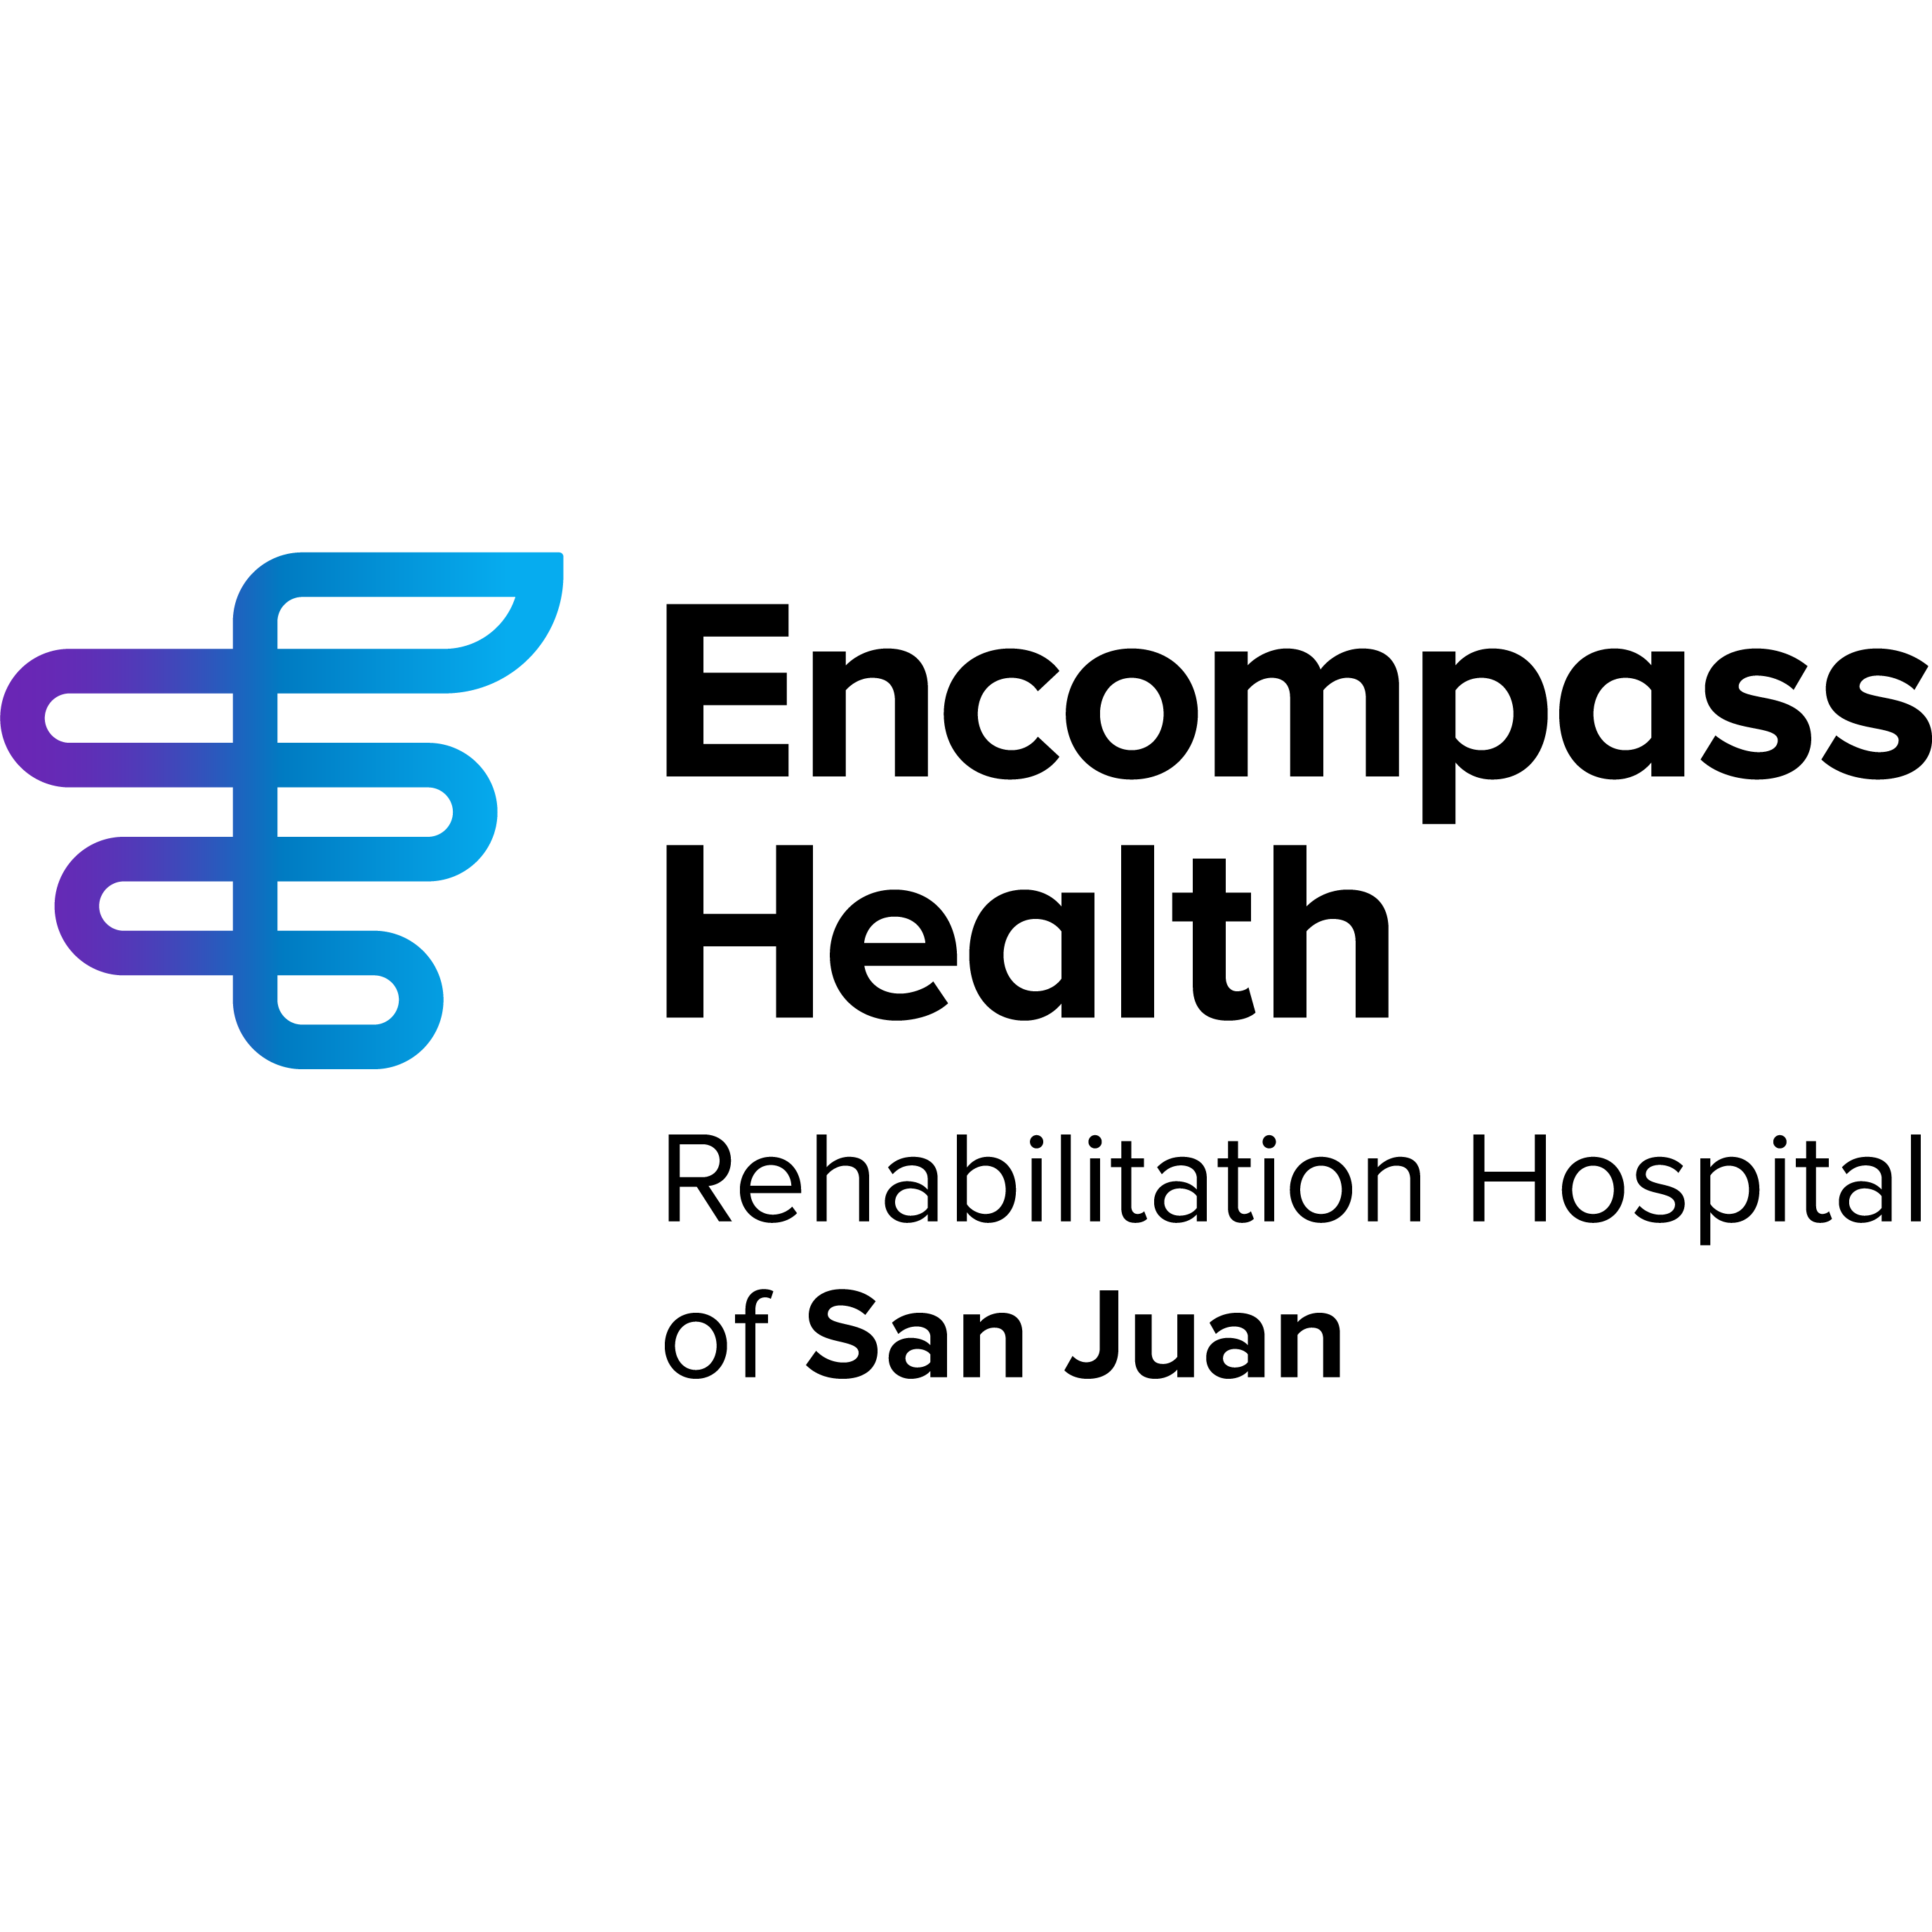 Encompass Health Rehabilitation Hospital of San Juan